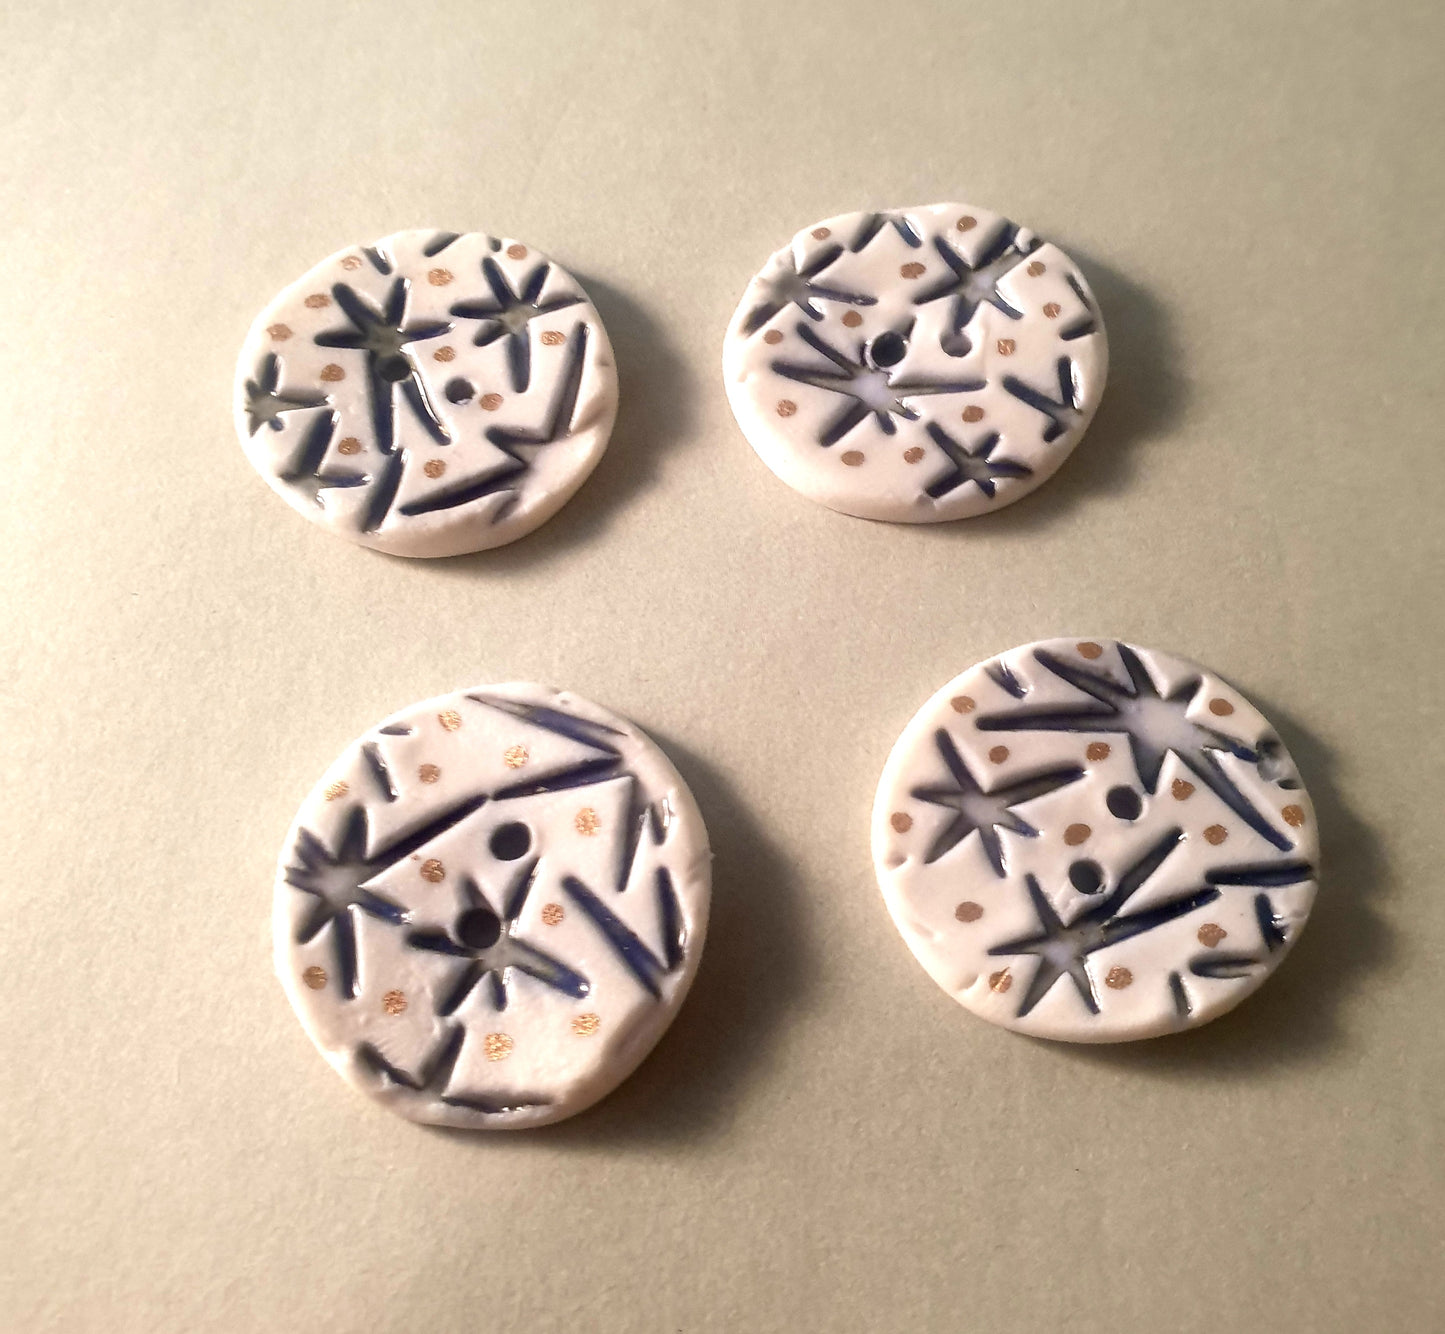 Round & square porcelain buttons